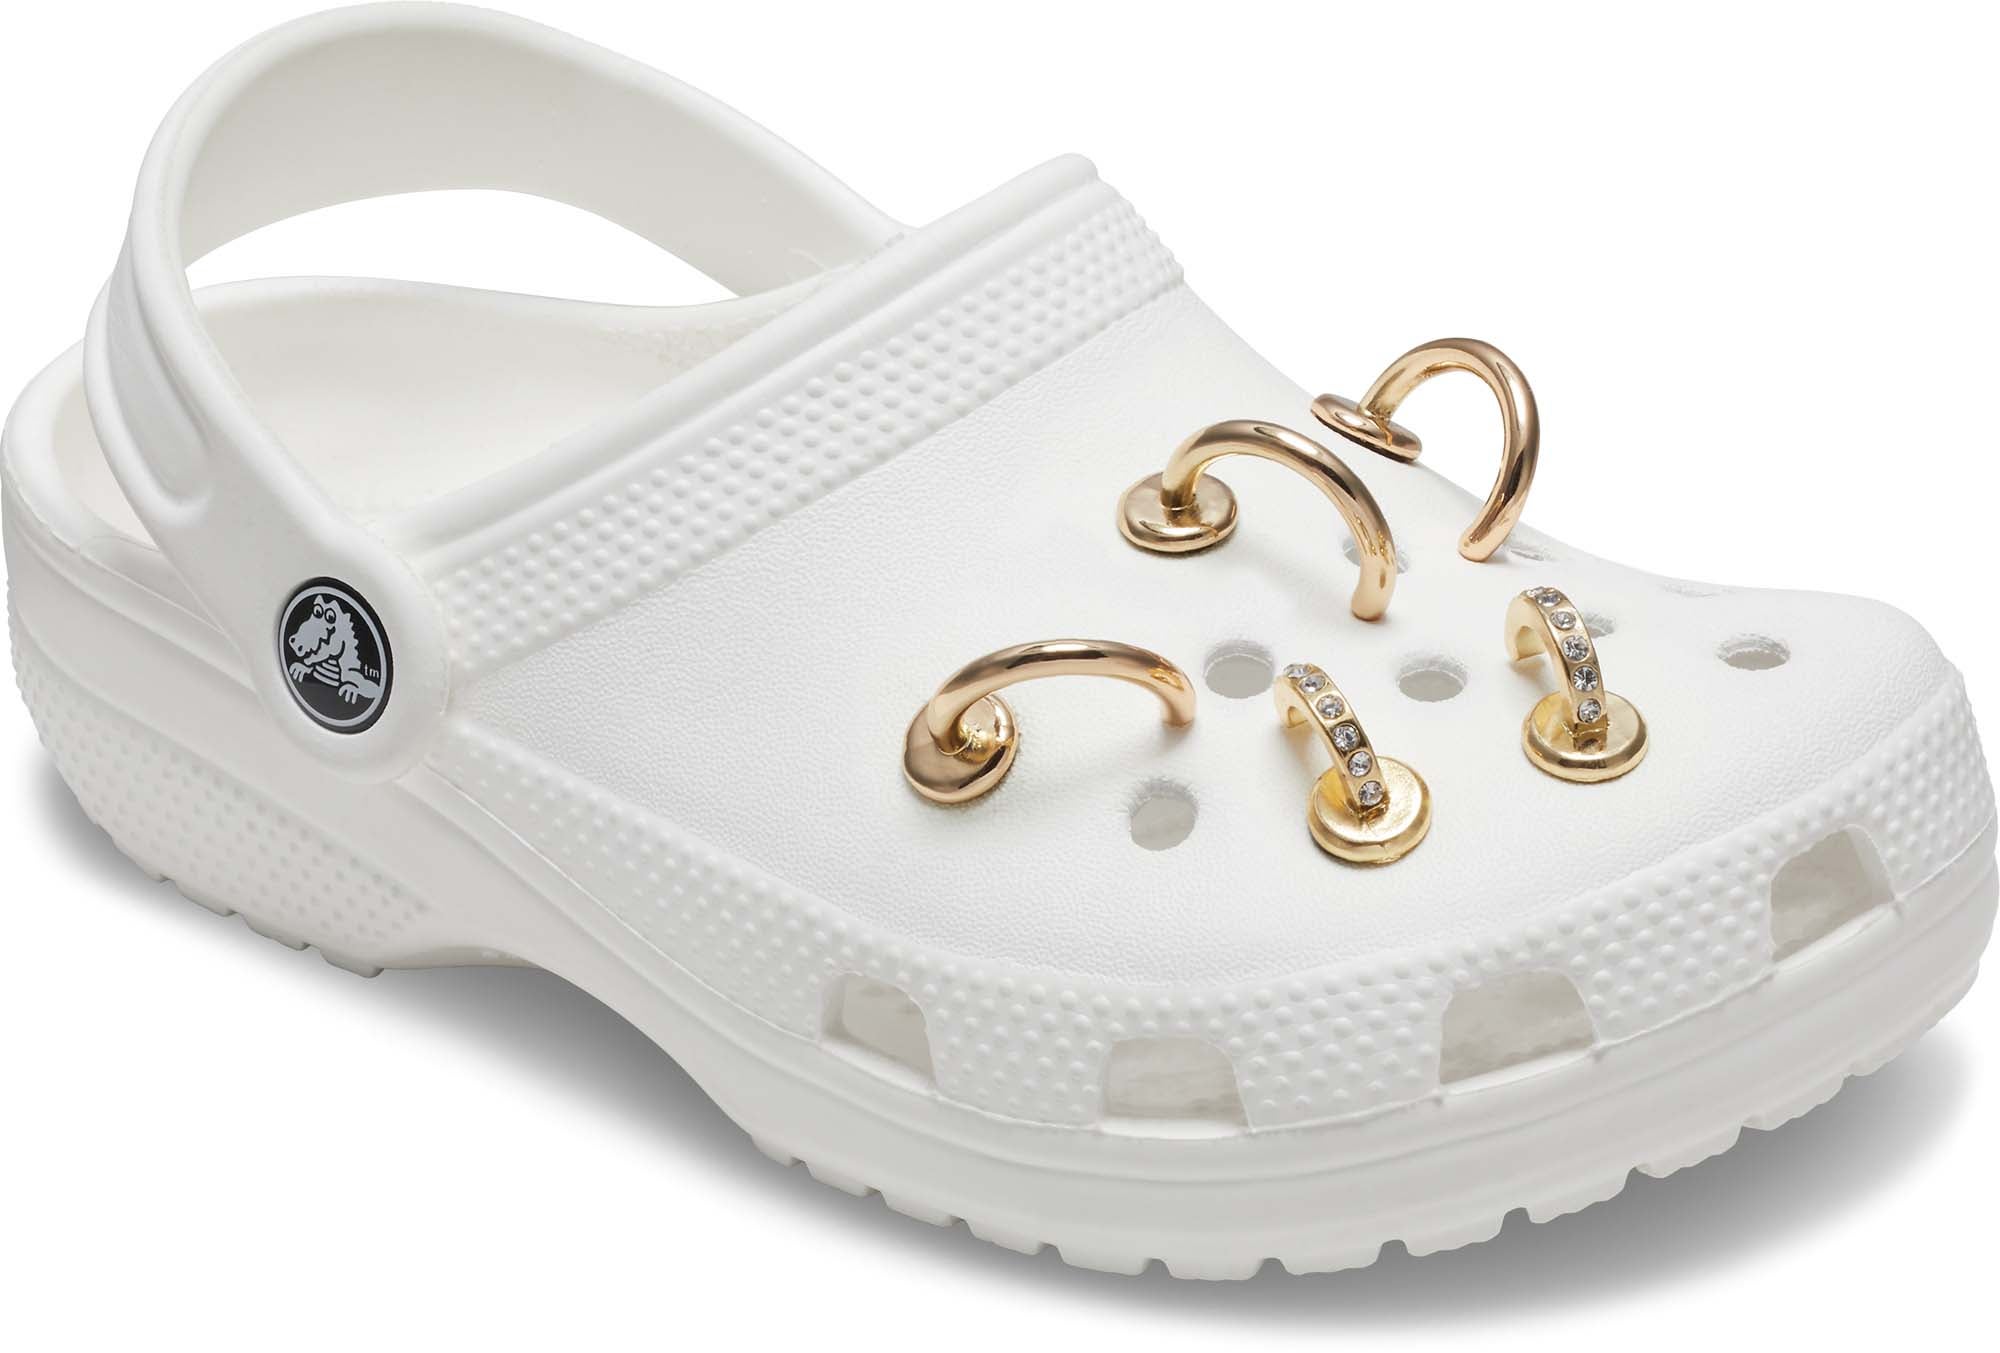 16Pcs Fishing Croc Charms,Shoes Charms for Croc Clog Sandals